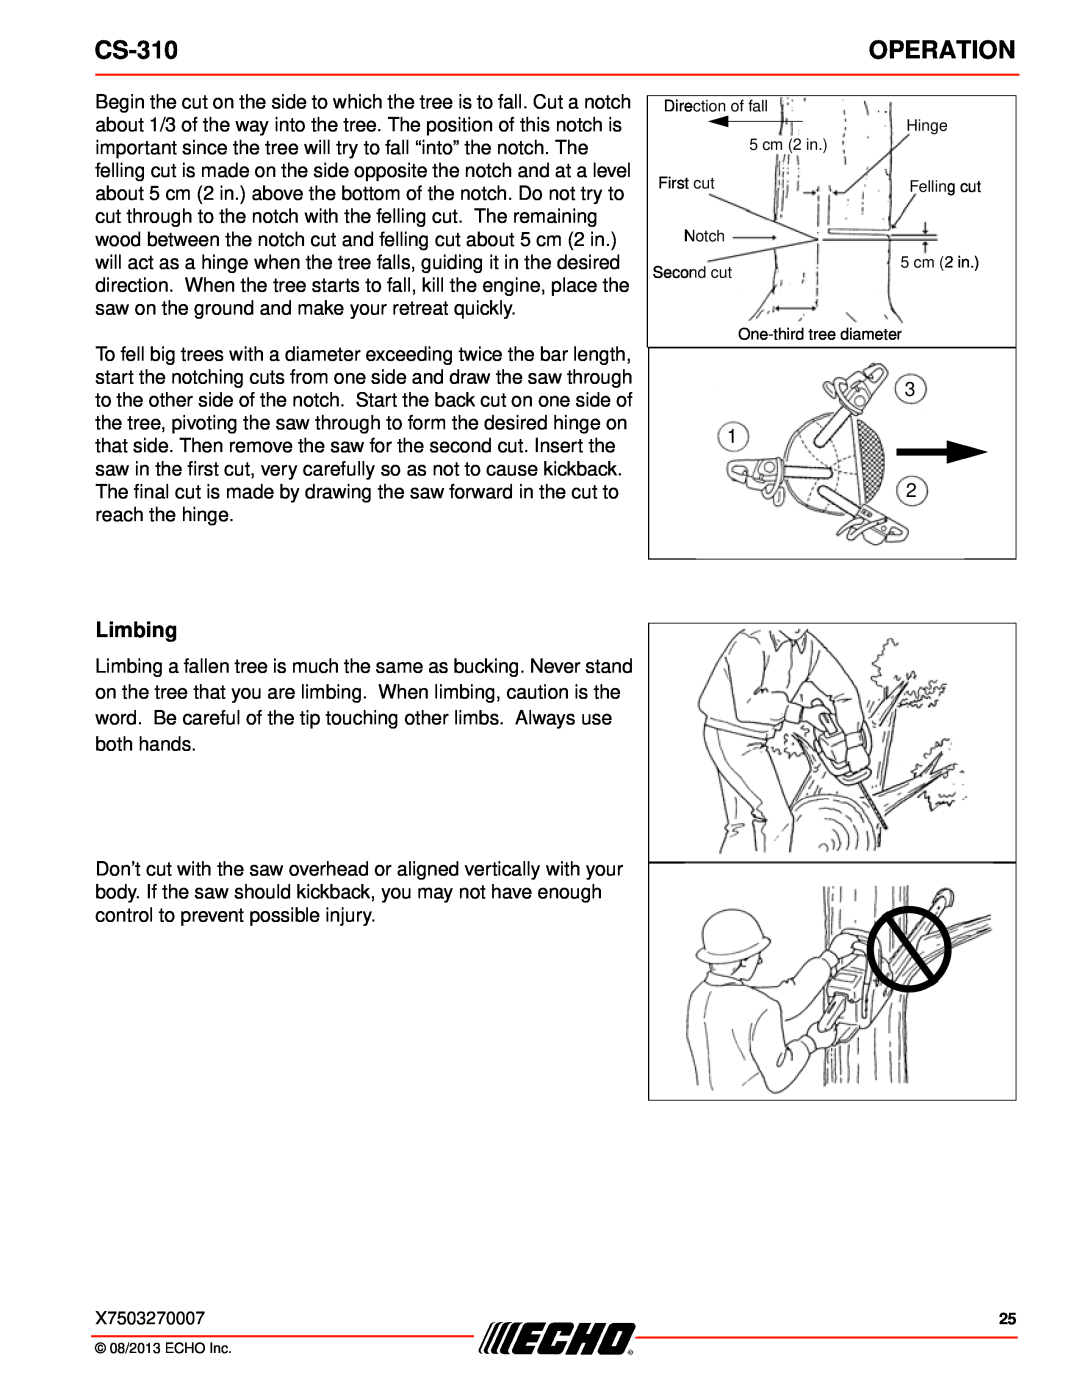 Echo CS-310 instruction manual Limbing, Operation 